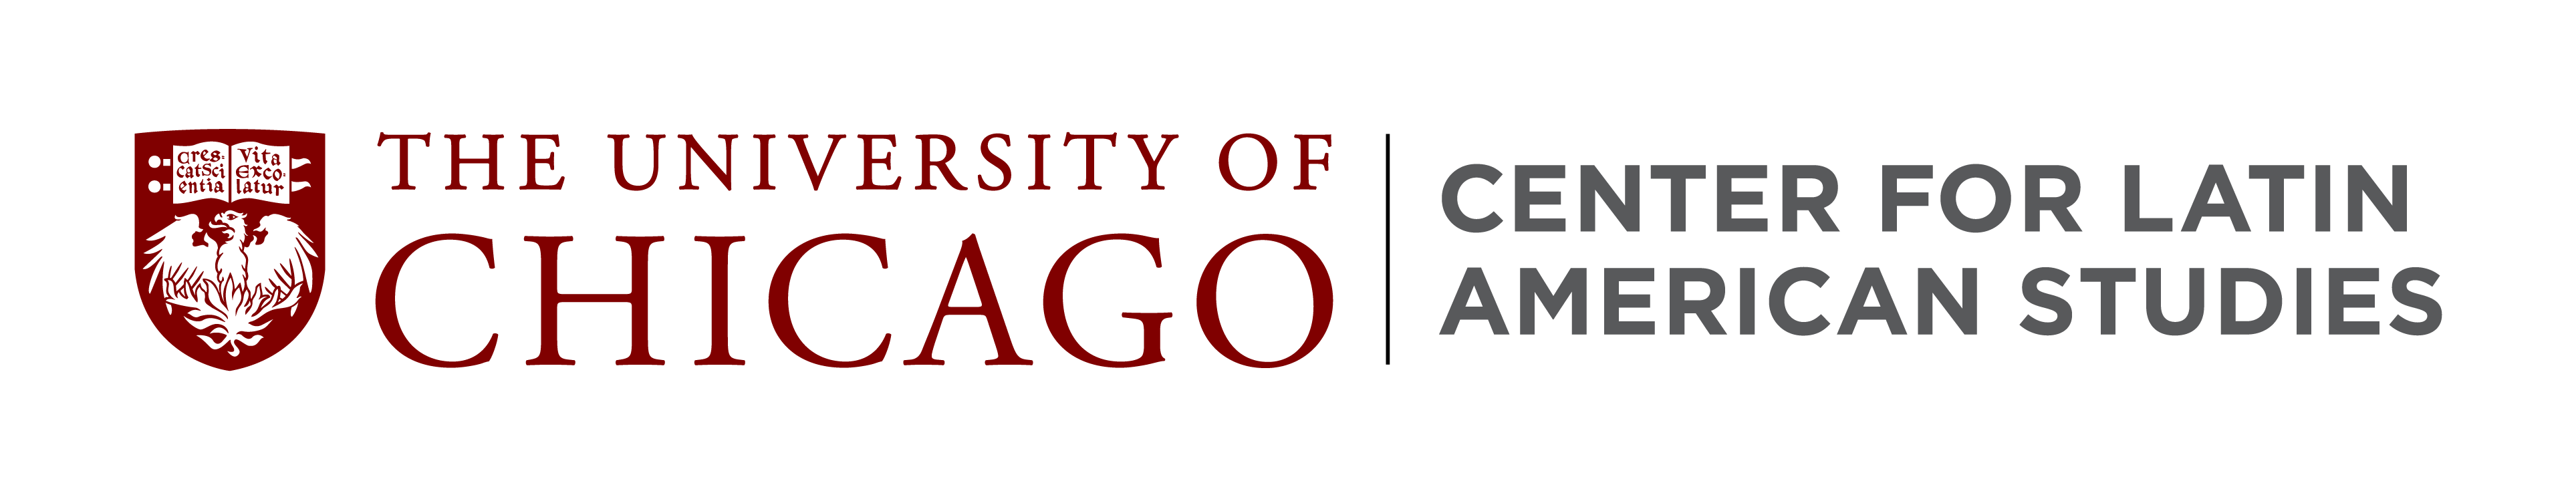 UC Center for Latin American Studies Logo